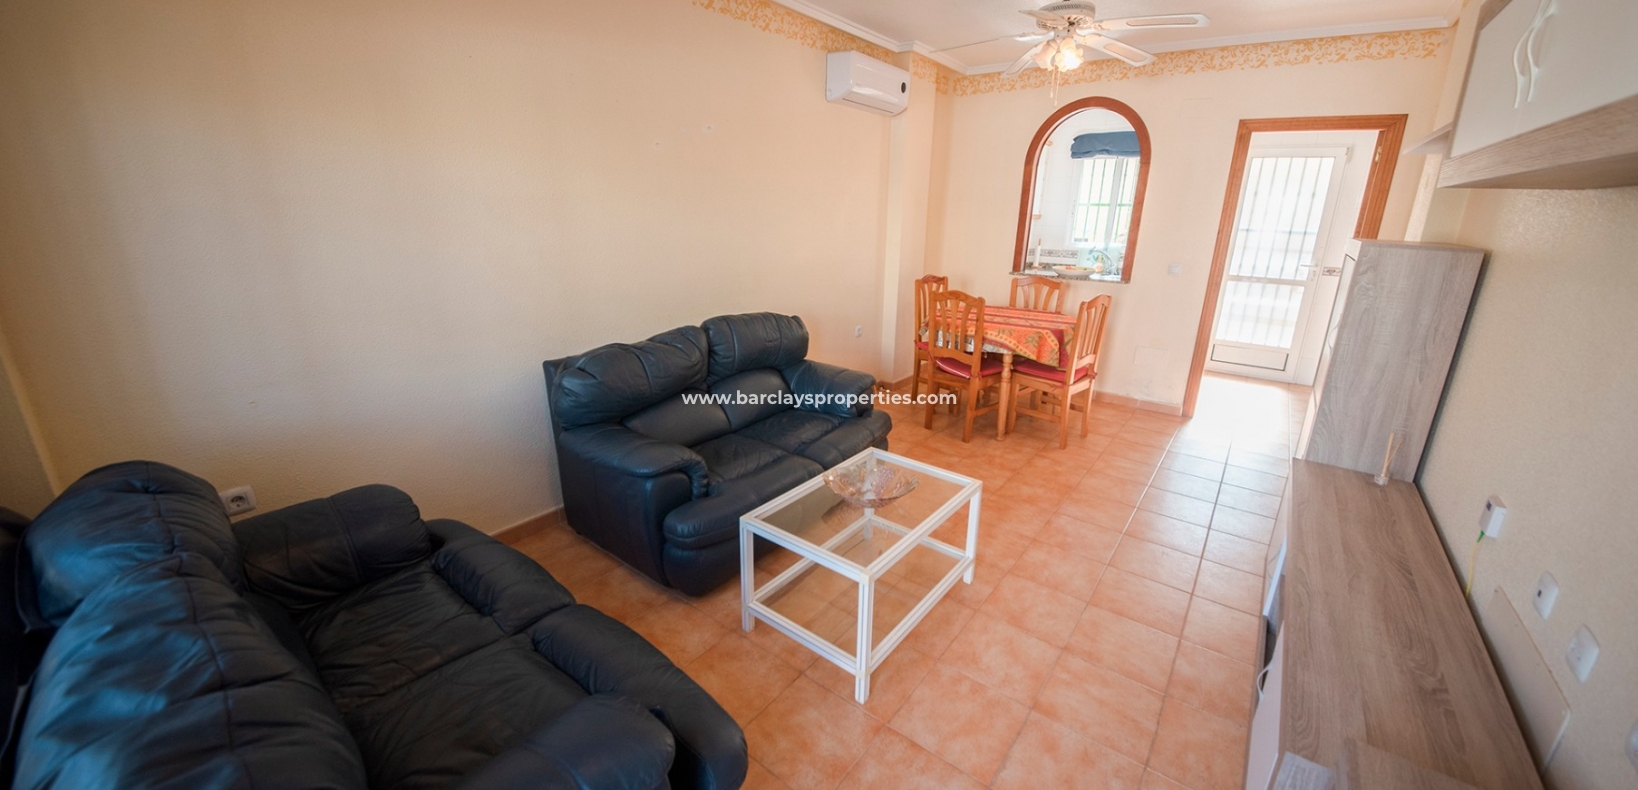 Living Room - Semi-Detached Property For Sale In La Marina Spain 